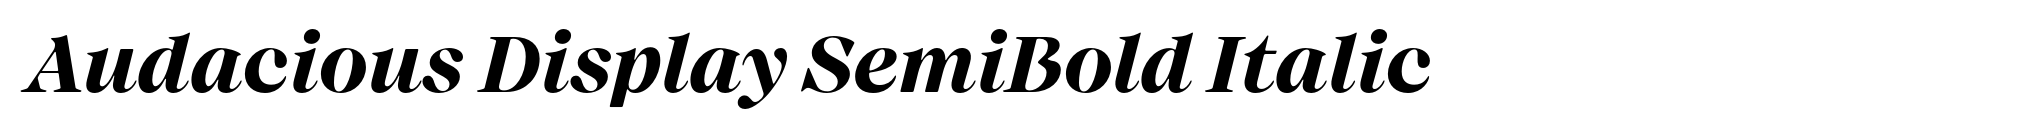 Audacious Display SemiBold Italic image